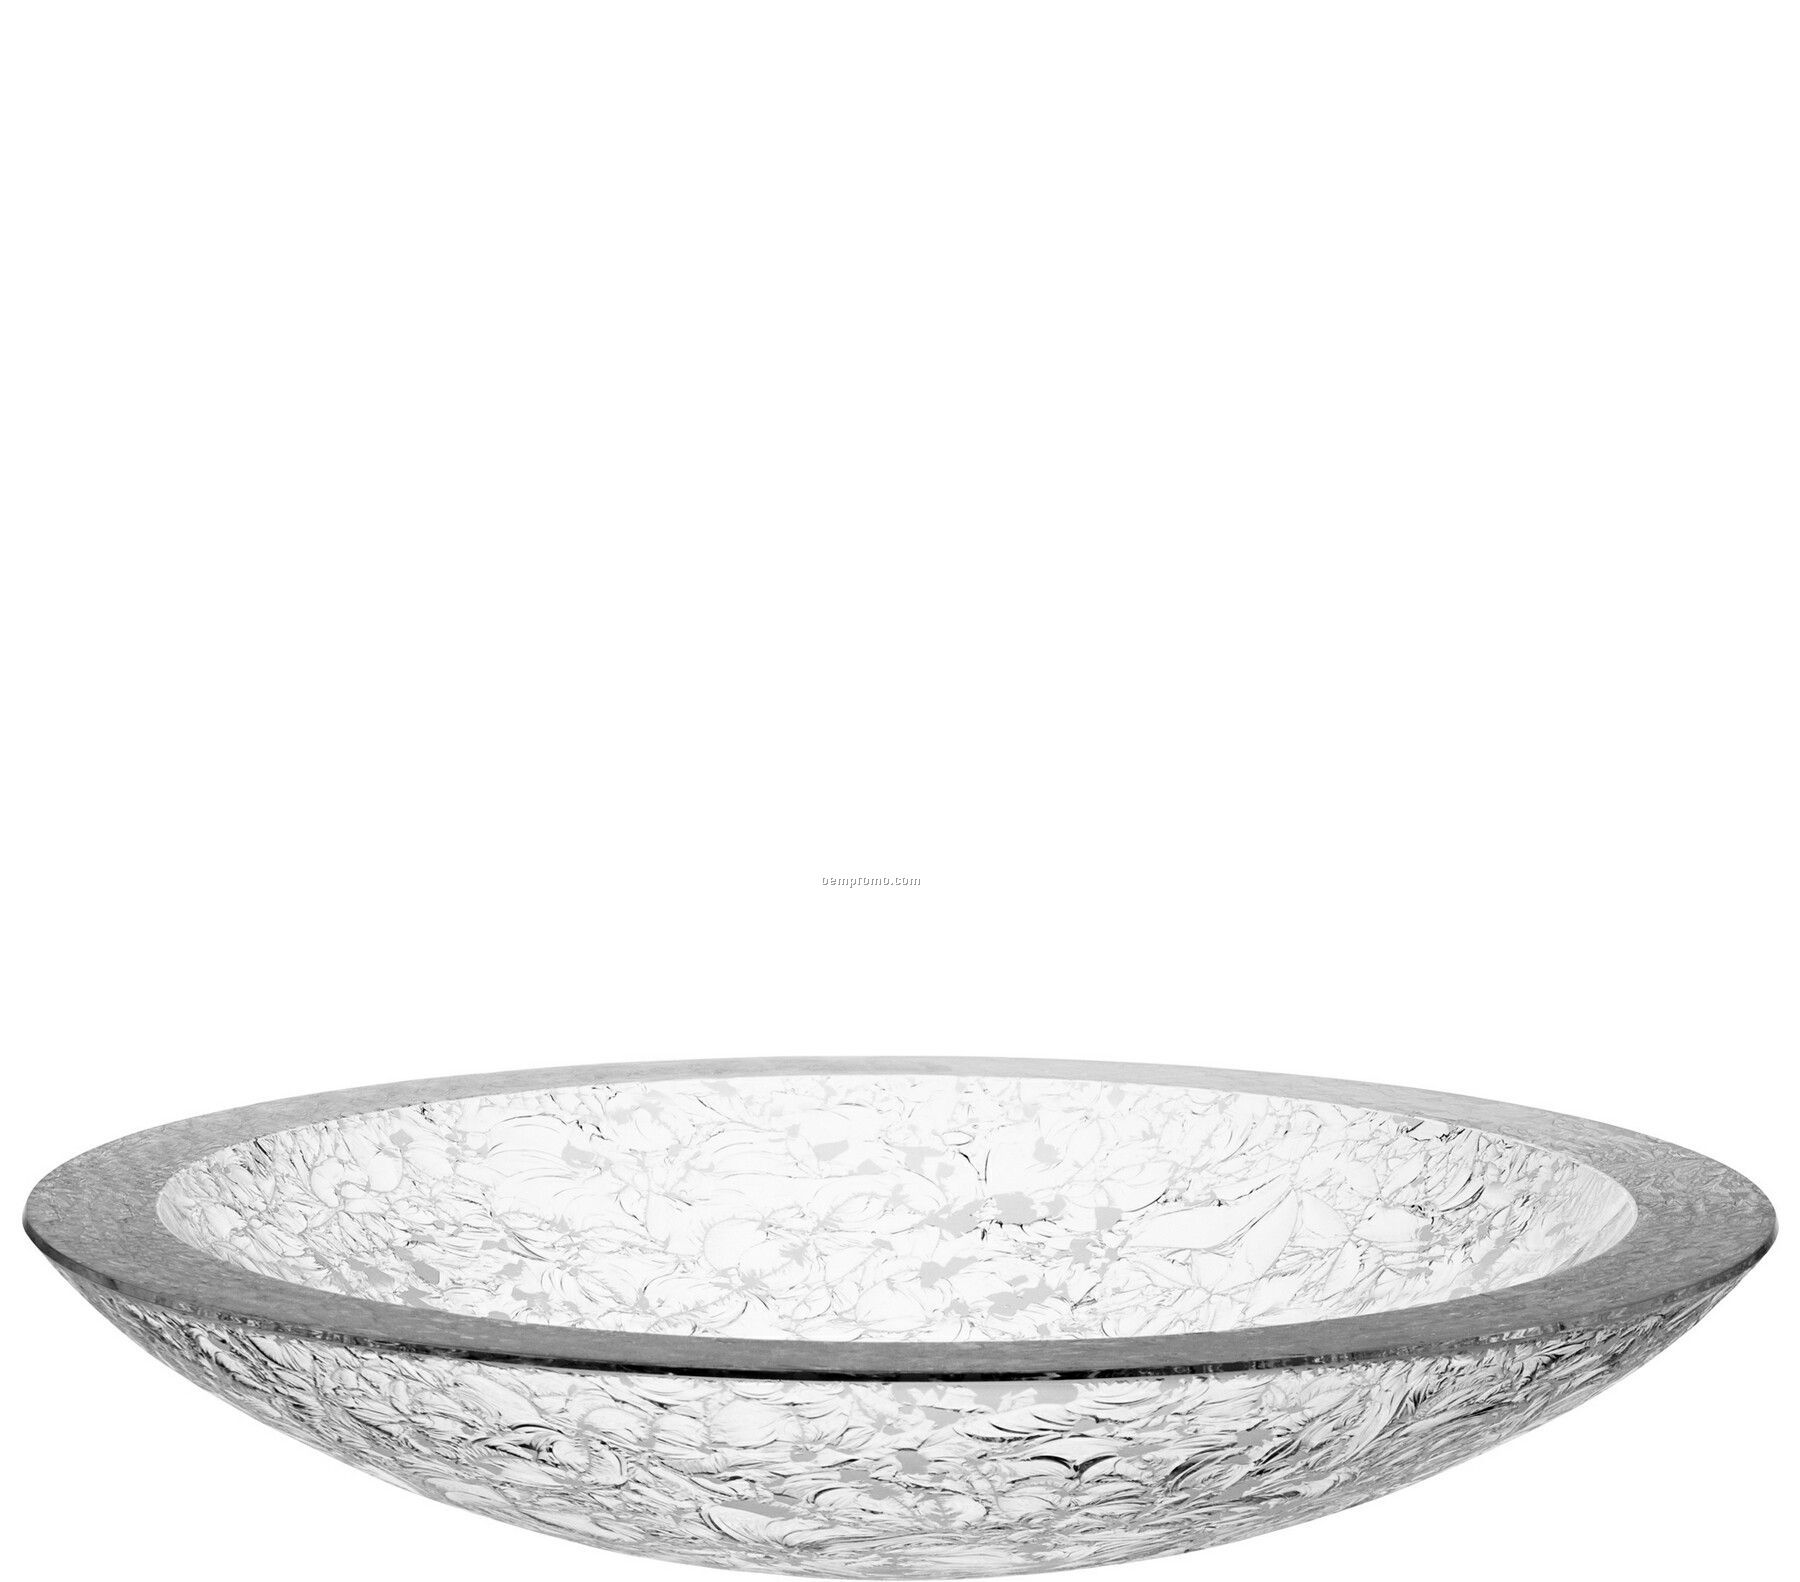 Minus 10 Degrees Crystal Bowl By Ingegerd Raman (2 3/4